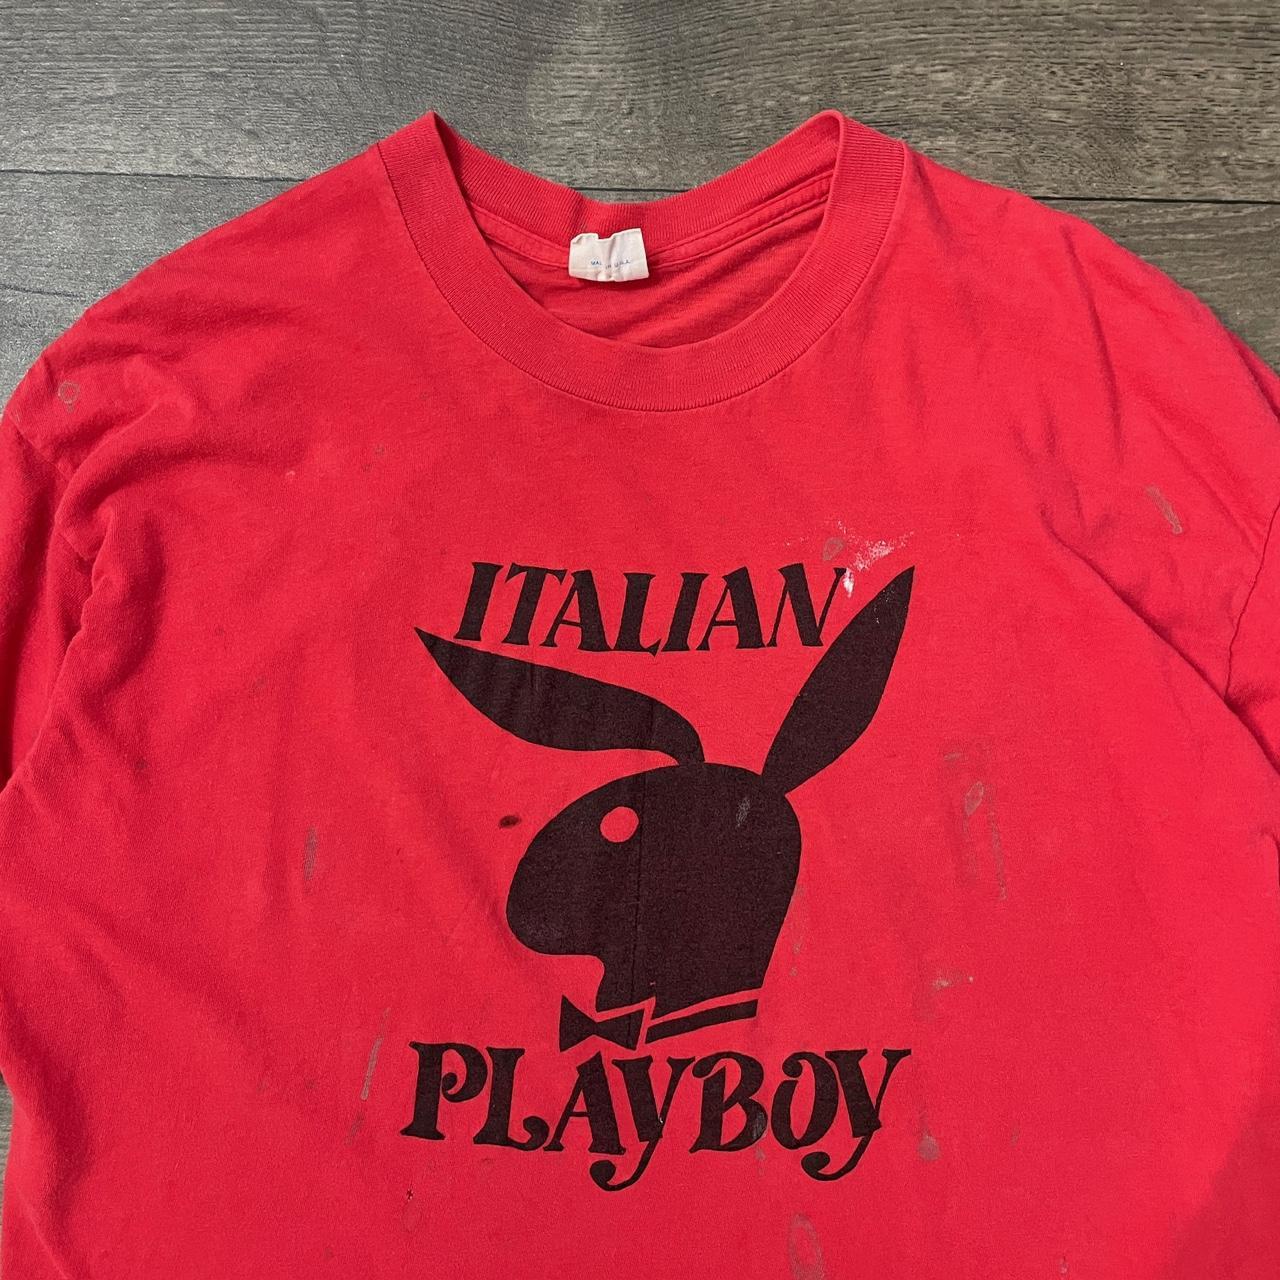 Vintage 70s Italian Playboy Distressed T...